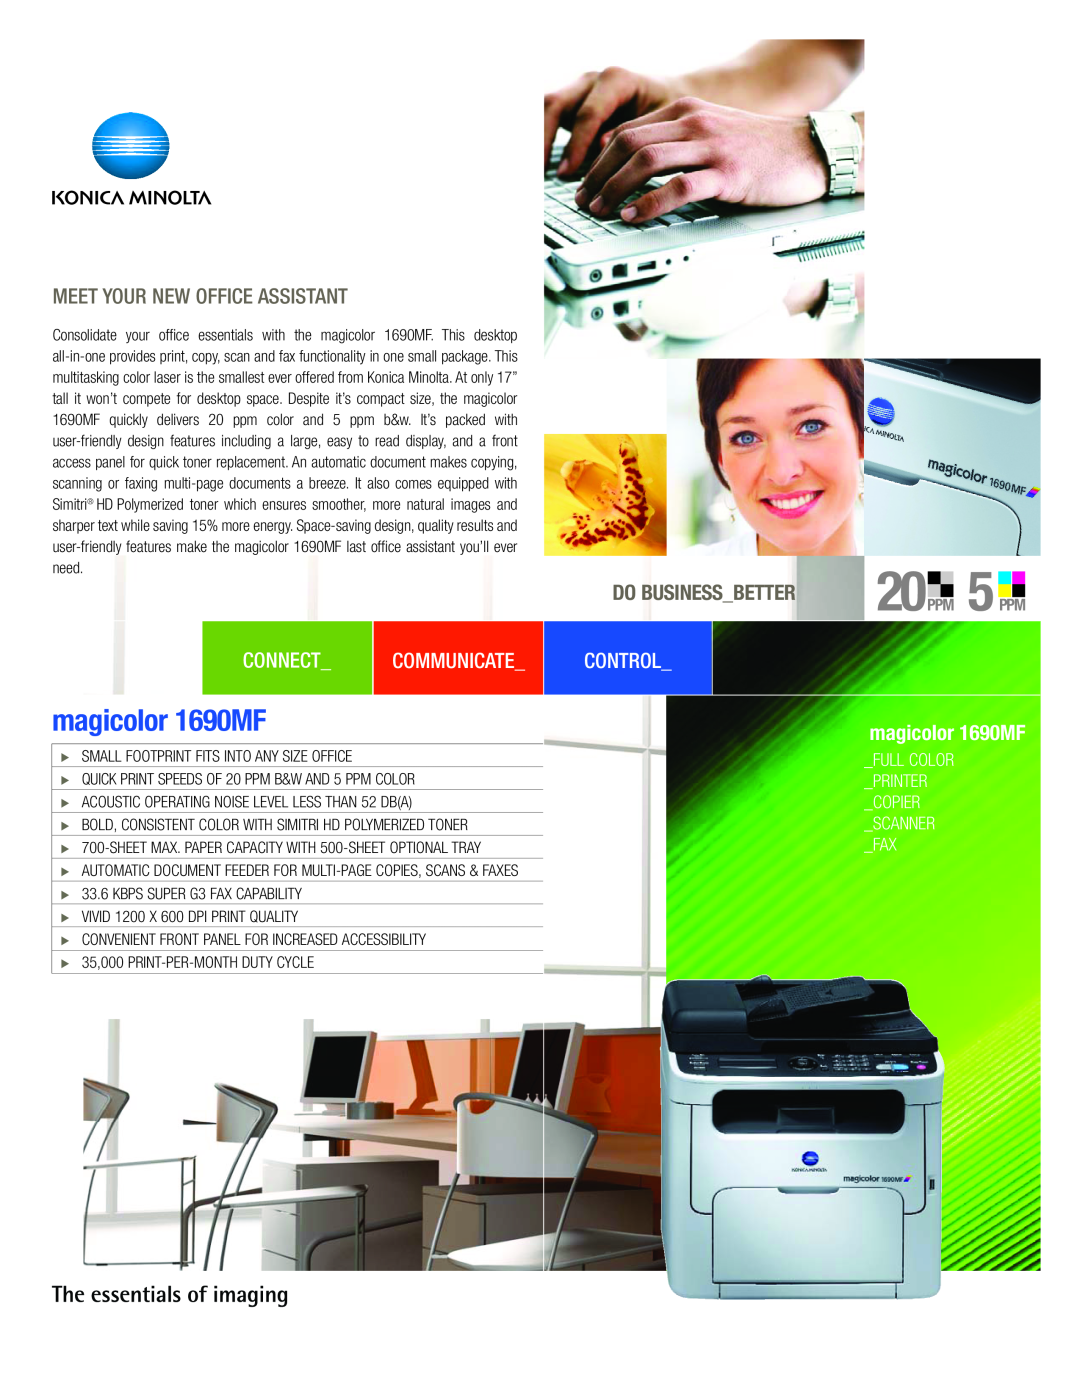 Konica Minolta manual Connect, Control, magicolor 1690MF, Communicate, Do Business Better, Printer, Copier, Scanner 